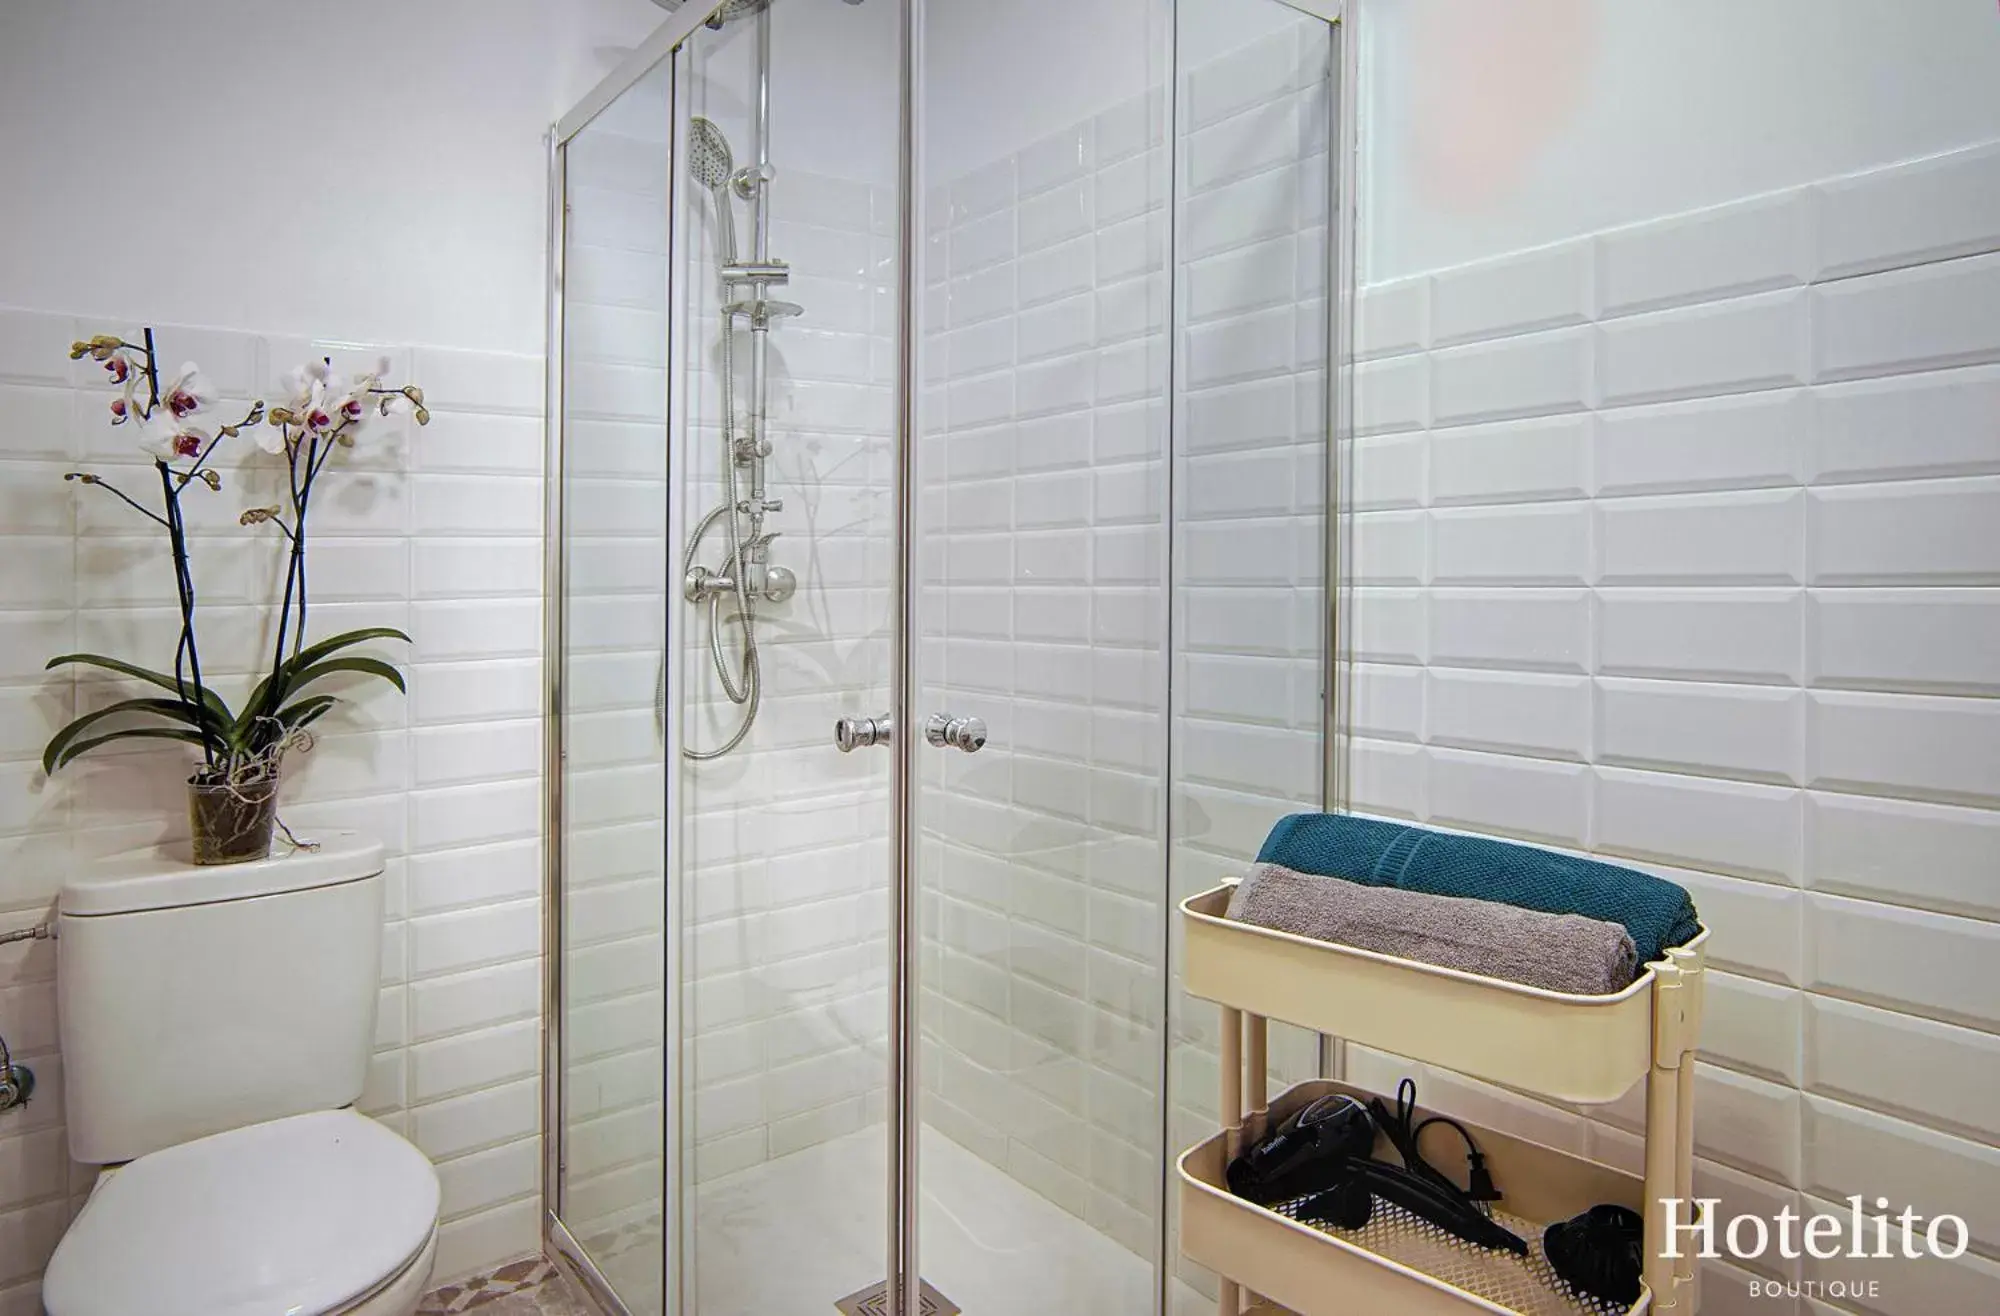 Shower, Bathroom in Hotelito Boutique Badalona.